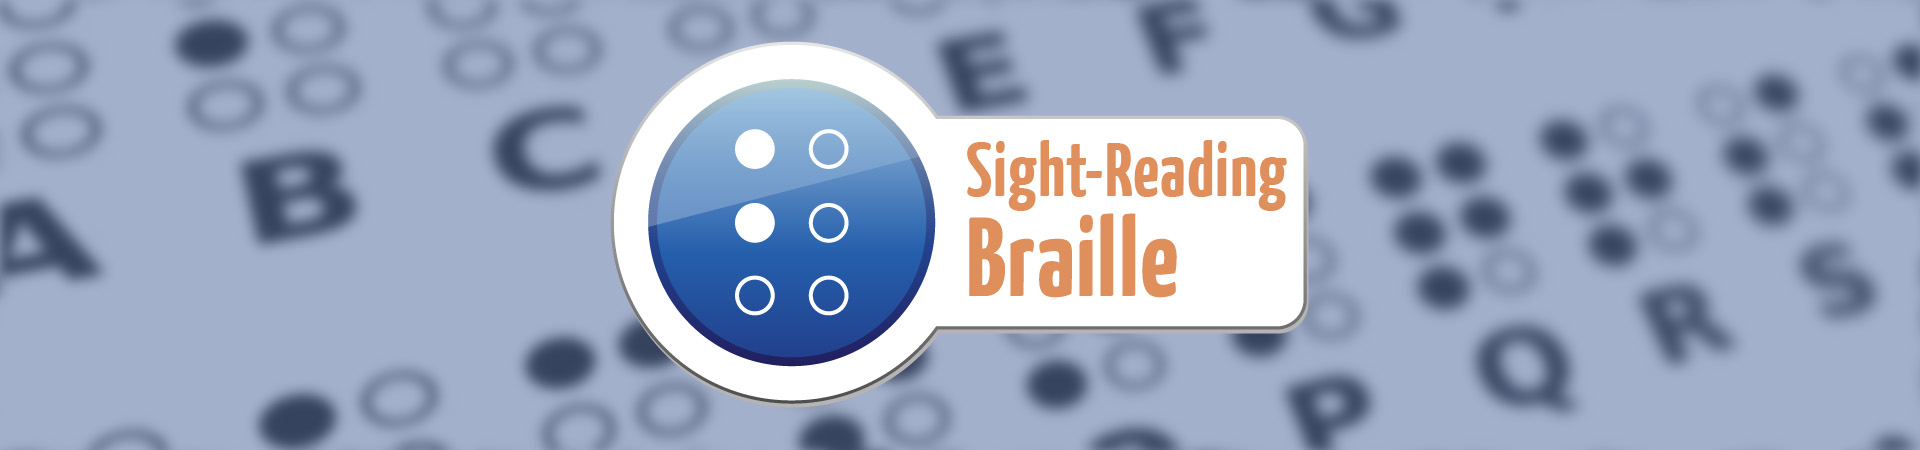 Sight-Reading Braille Module